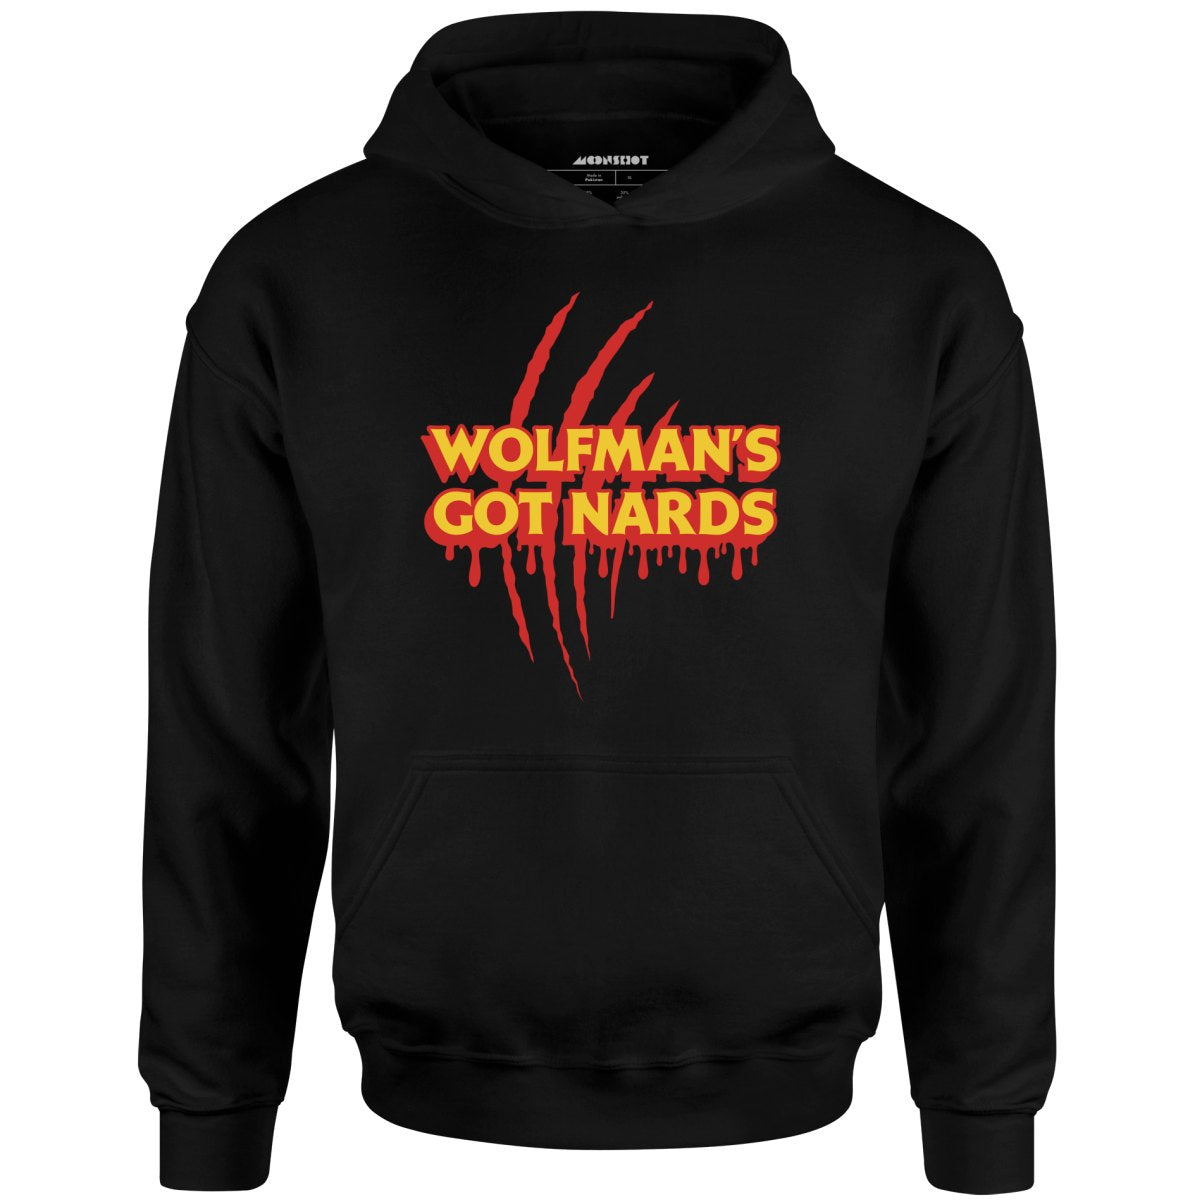 Wolfman's Got Nards - Unisex Hoodie